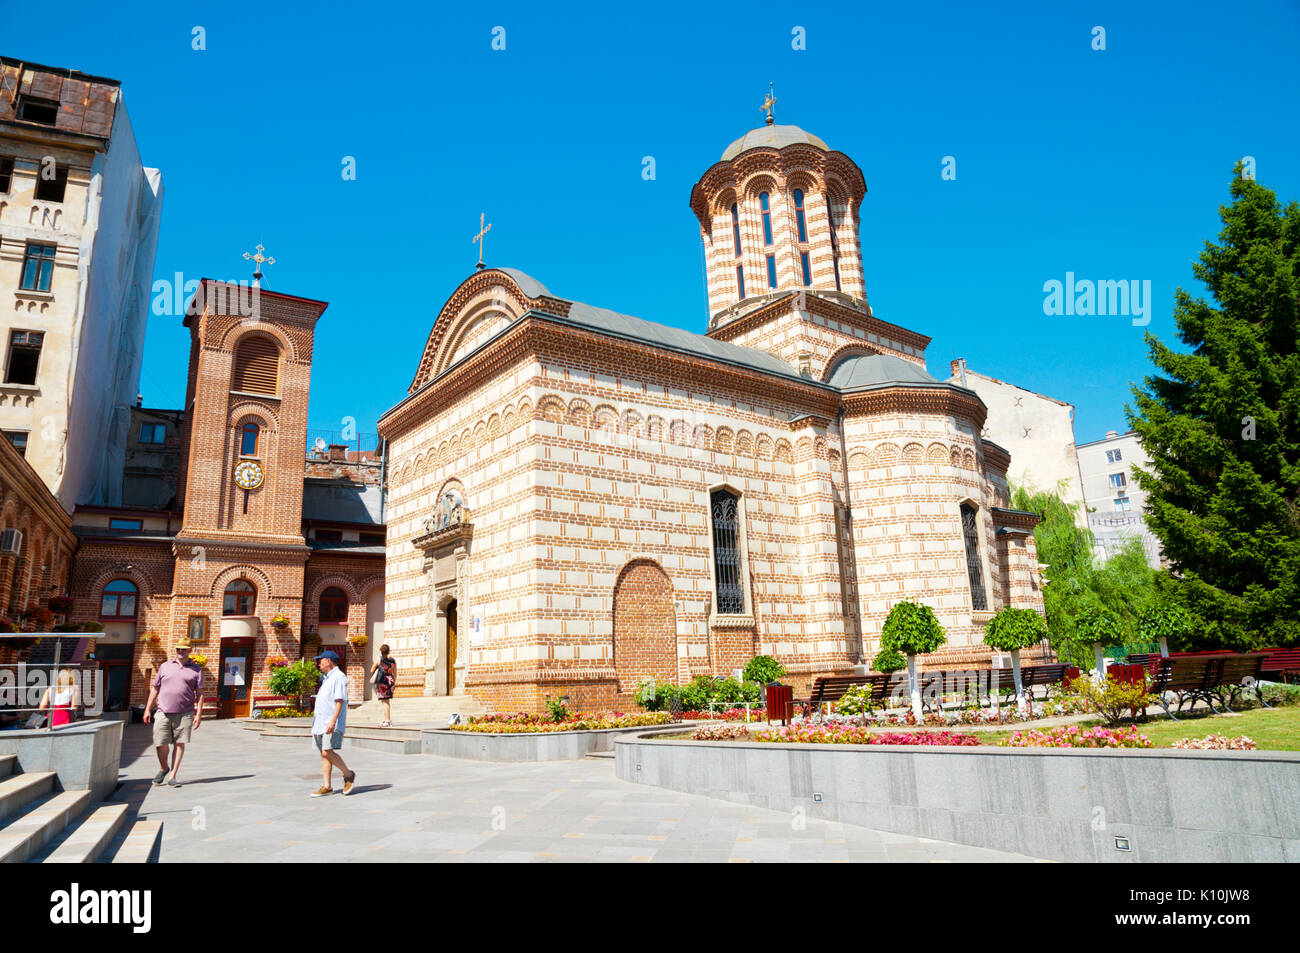 Biserica Sfantul Anton, Curtea Veche church, Old Princely Court, Bucharest, Romania Stock Photo